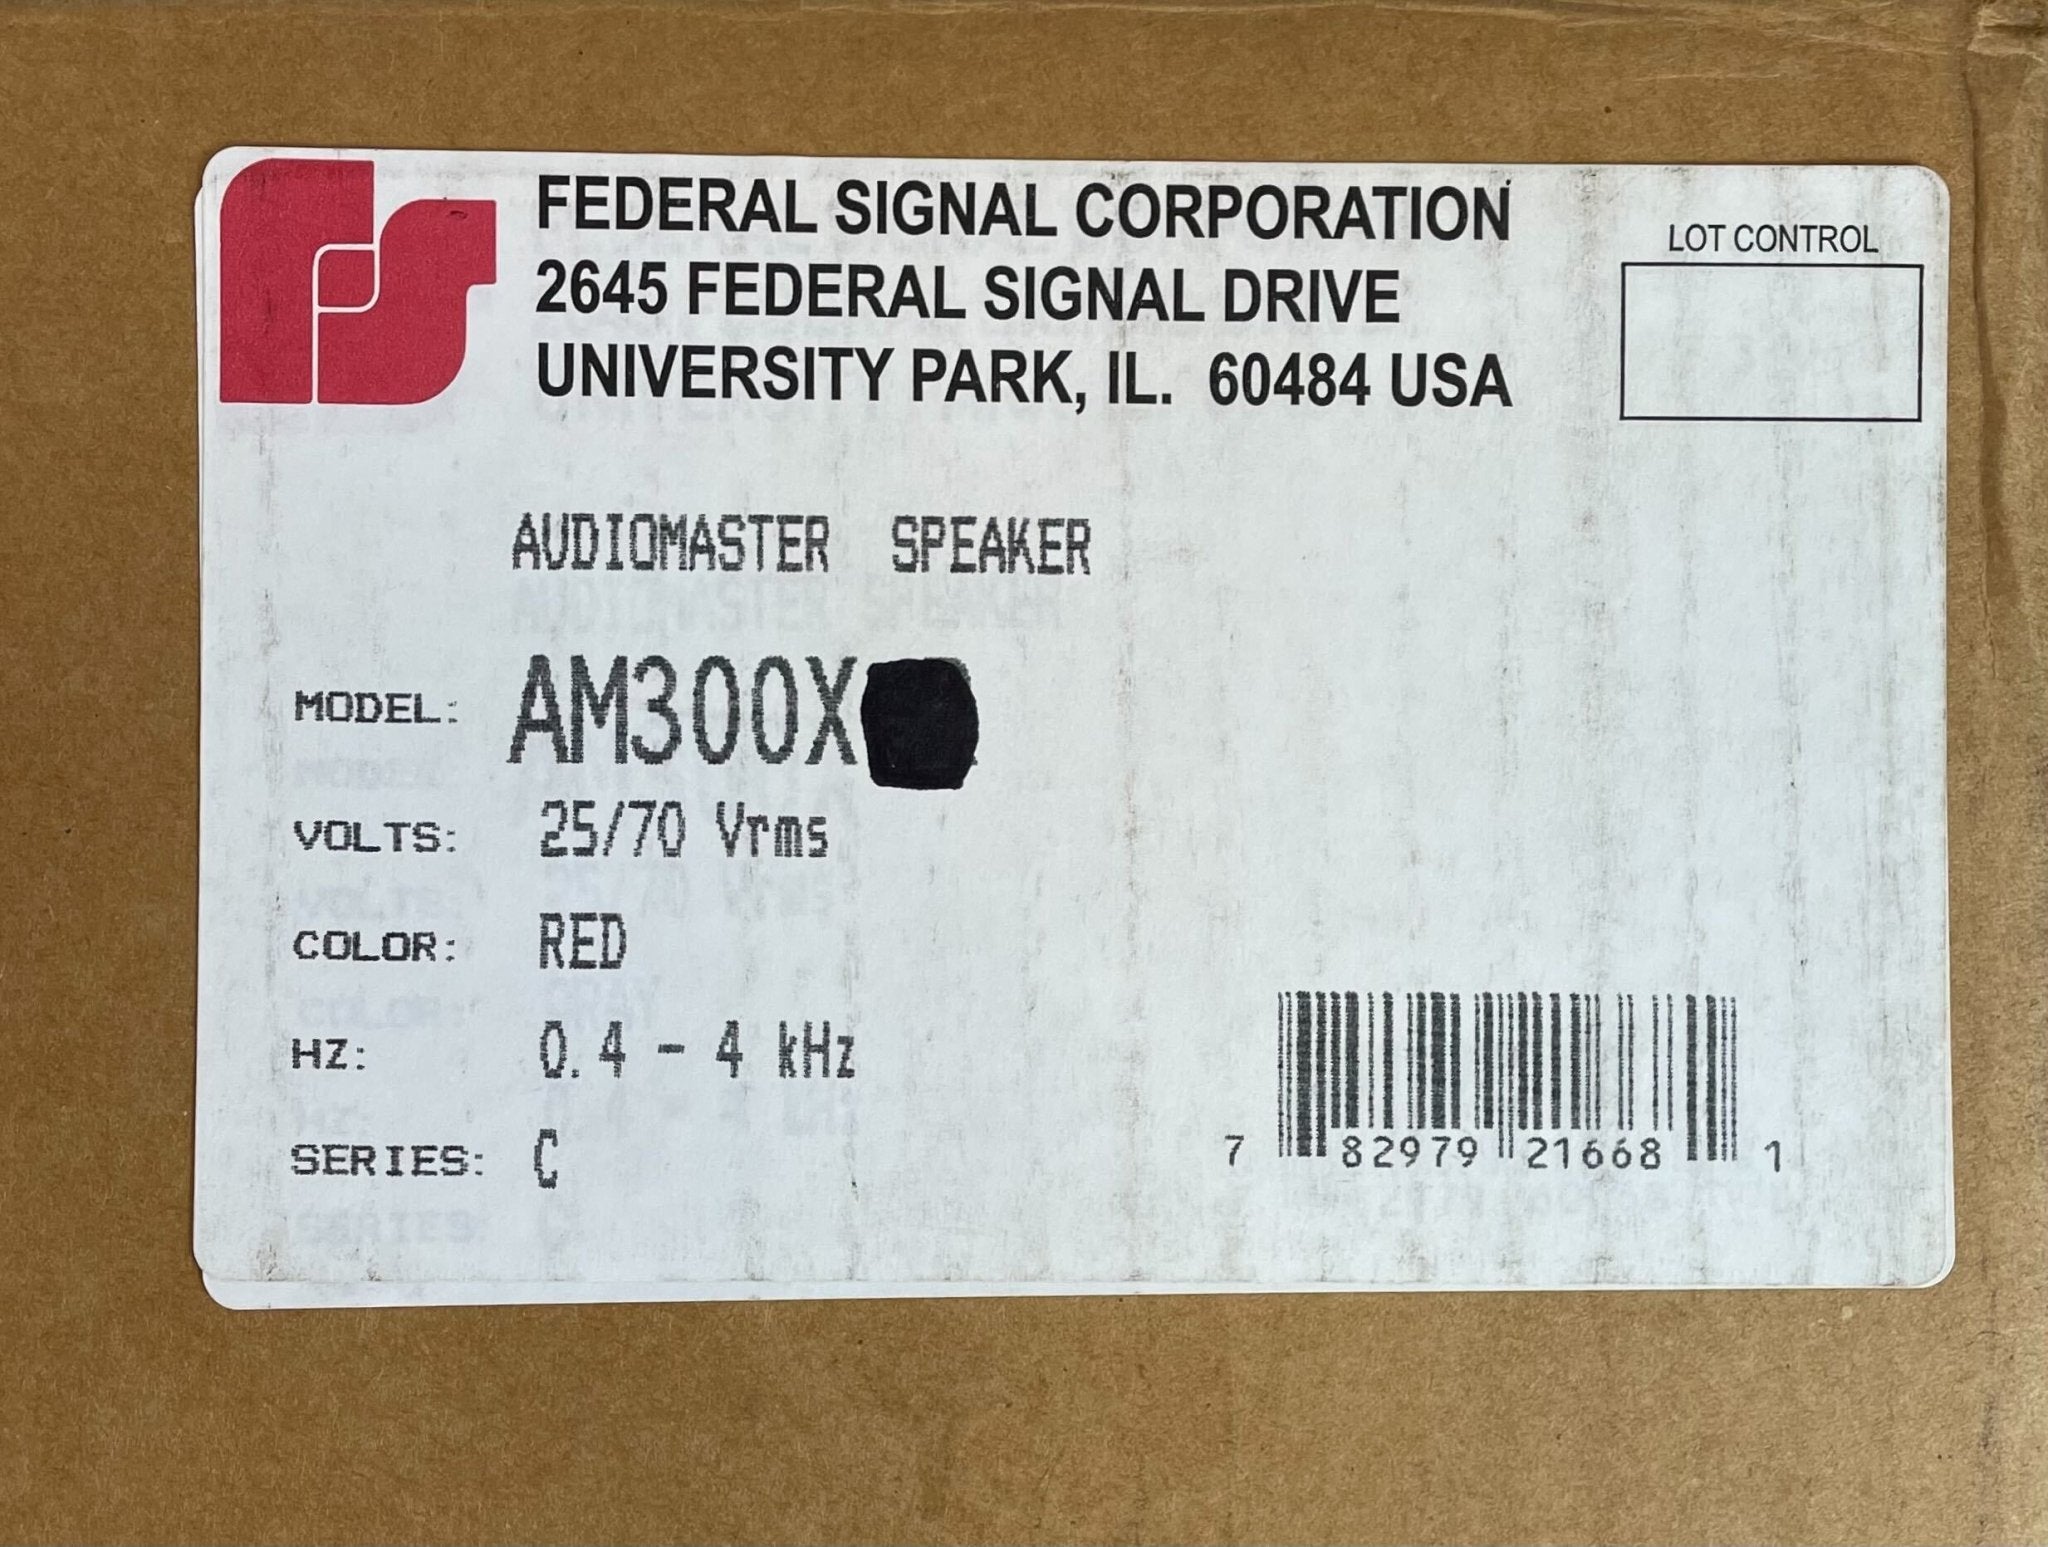 Federal Signal AM300X - The Fire Alarm Supplier